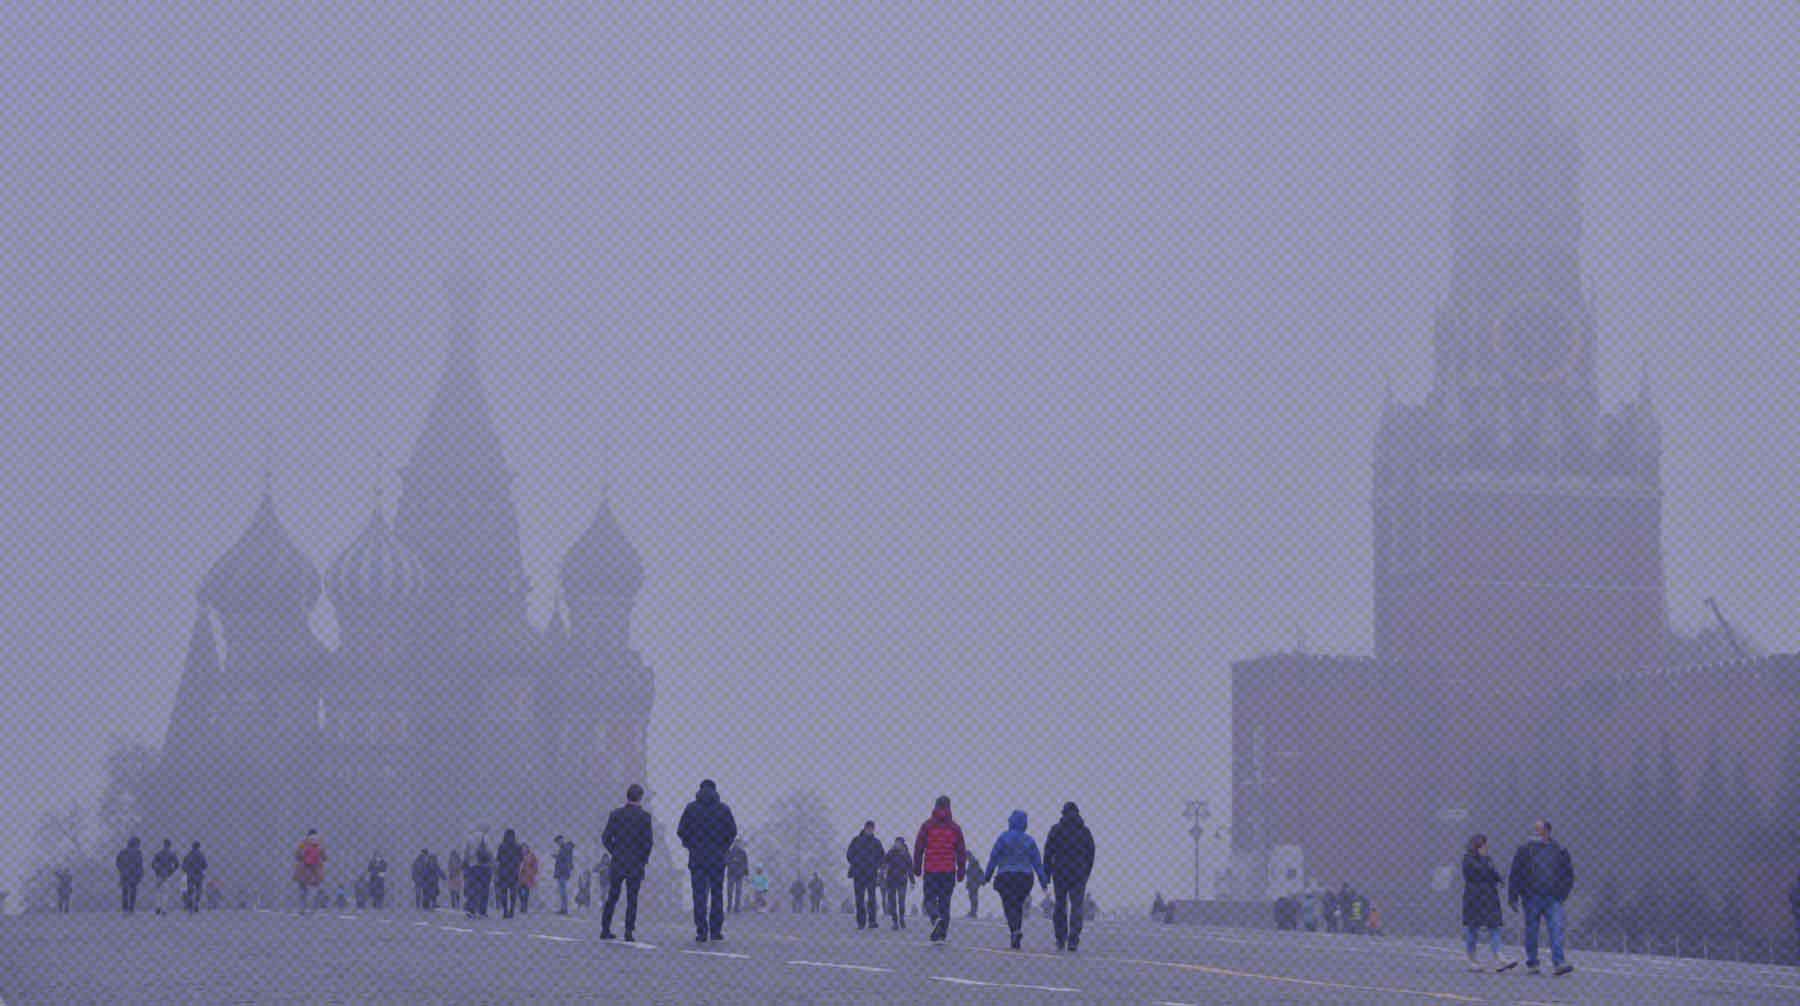 Циклон Бенедикт накрыл города. Фото и видео из Петербурга, Крыма и Стамбула